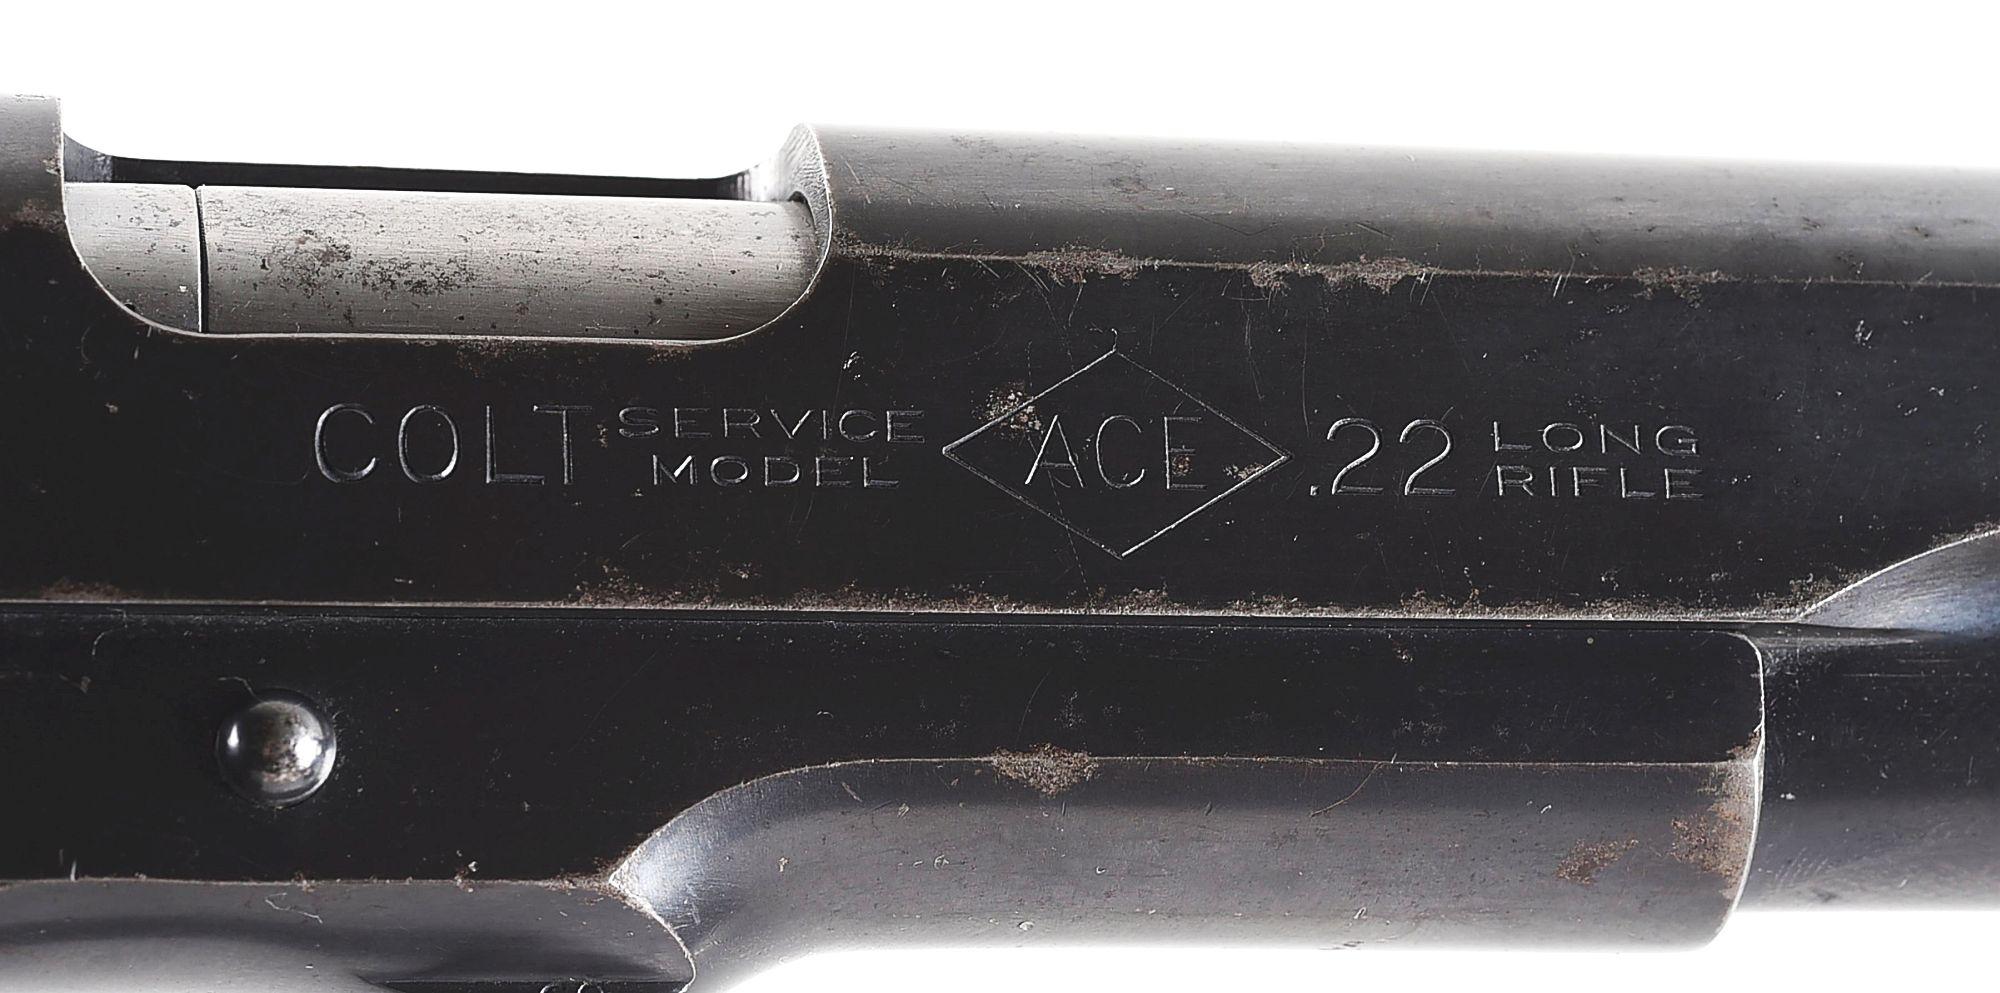 (A) SCARCE PRE-WAR COLT SERVICE MODEL ACE .22 LR SEMI-AUTOMATIC PISTOL (1940).